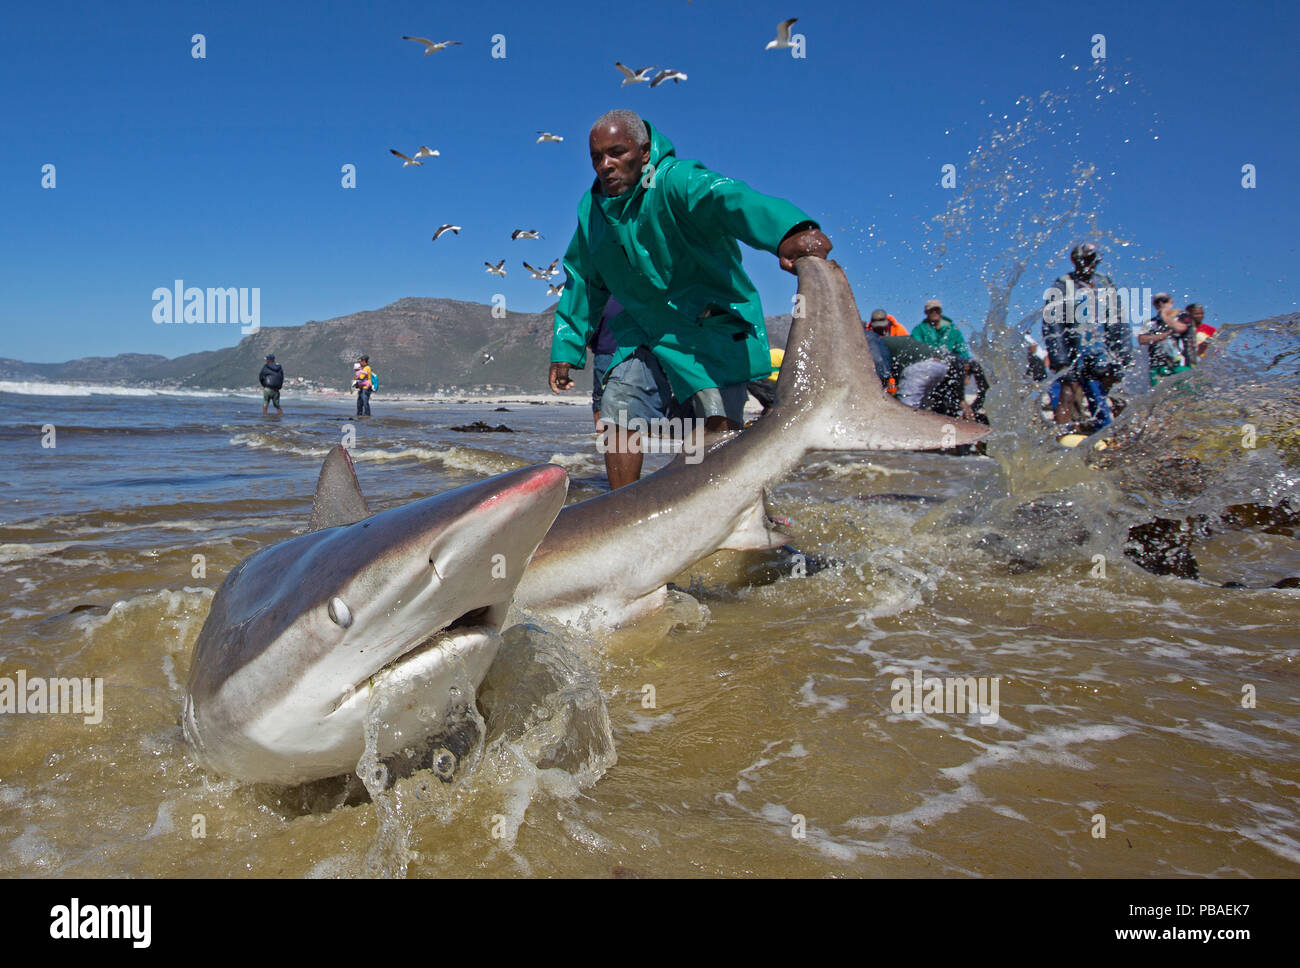 Bronze whaler shark (Carcharhinus brachyurus), catturati nelle tradizionali seine net e rilasciato dal pescatore, Muizenberg Beach, Città del Capo, Sud Africa, Gennaio 2014 Foto Stock